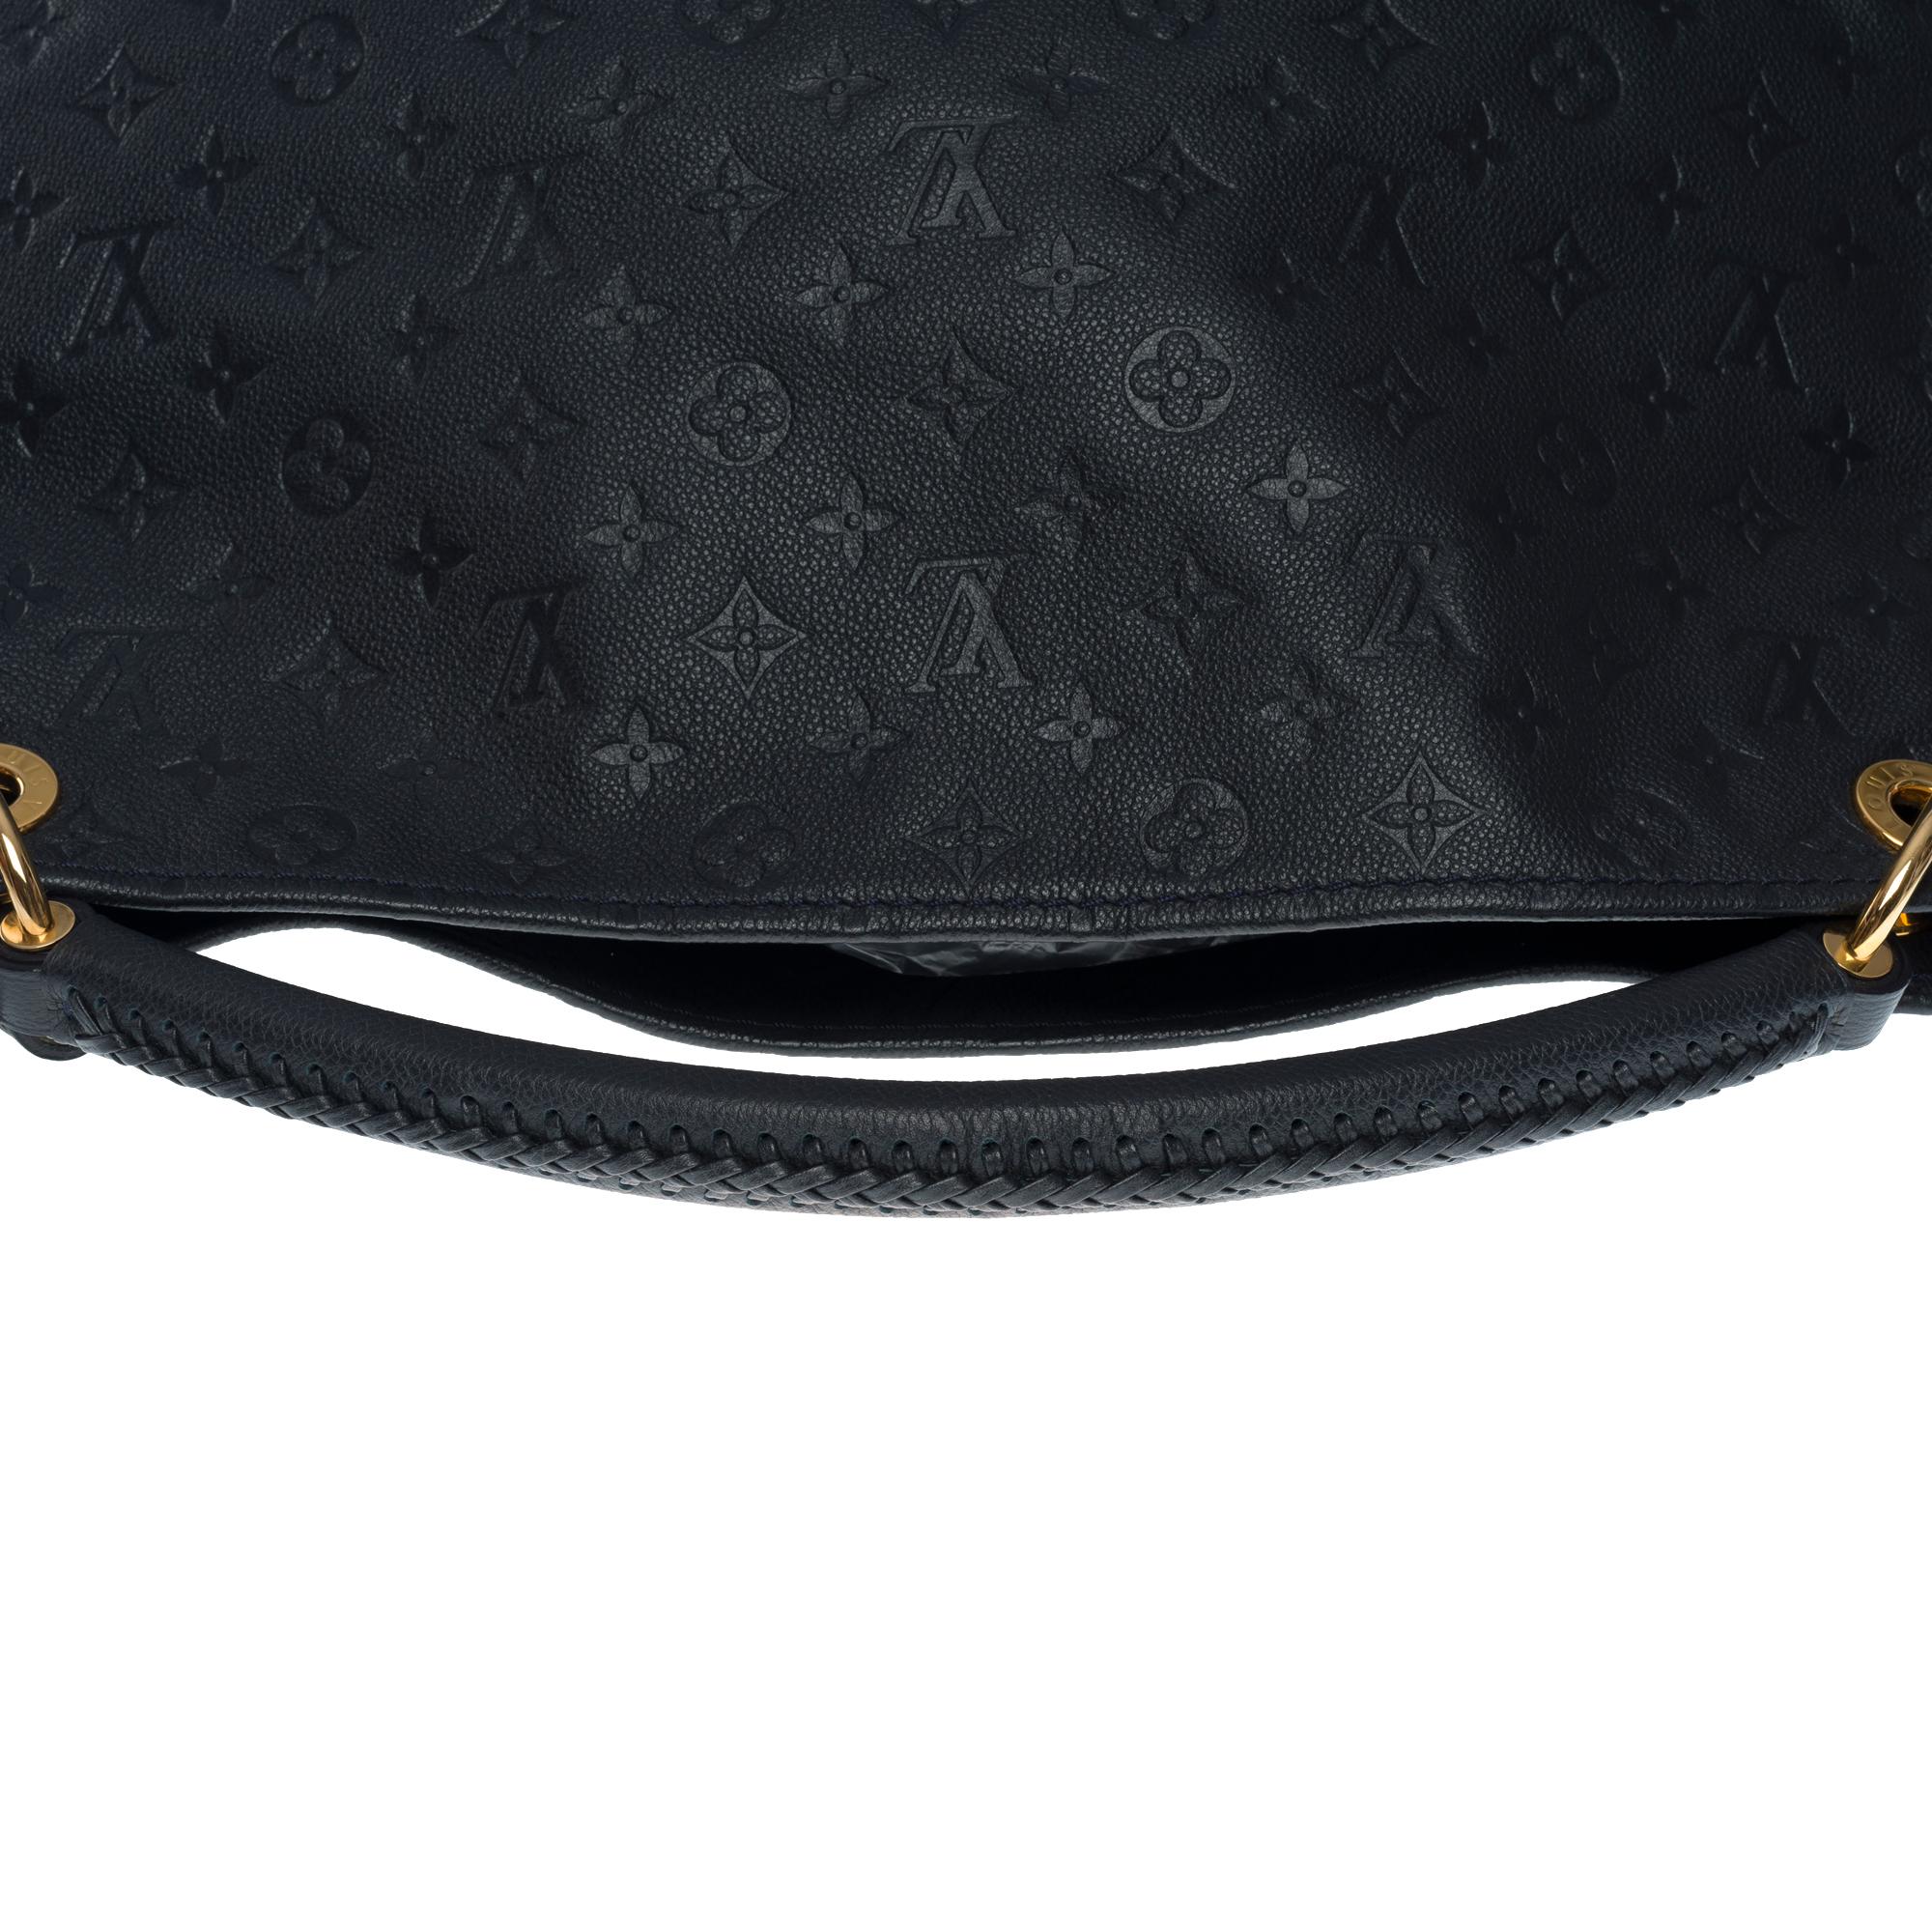 Louis Vuitton Artsy MM Hobo bag in dark blue monogram calfskin leather, GHW For Sale 4